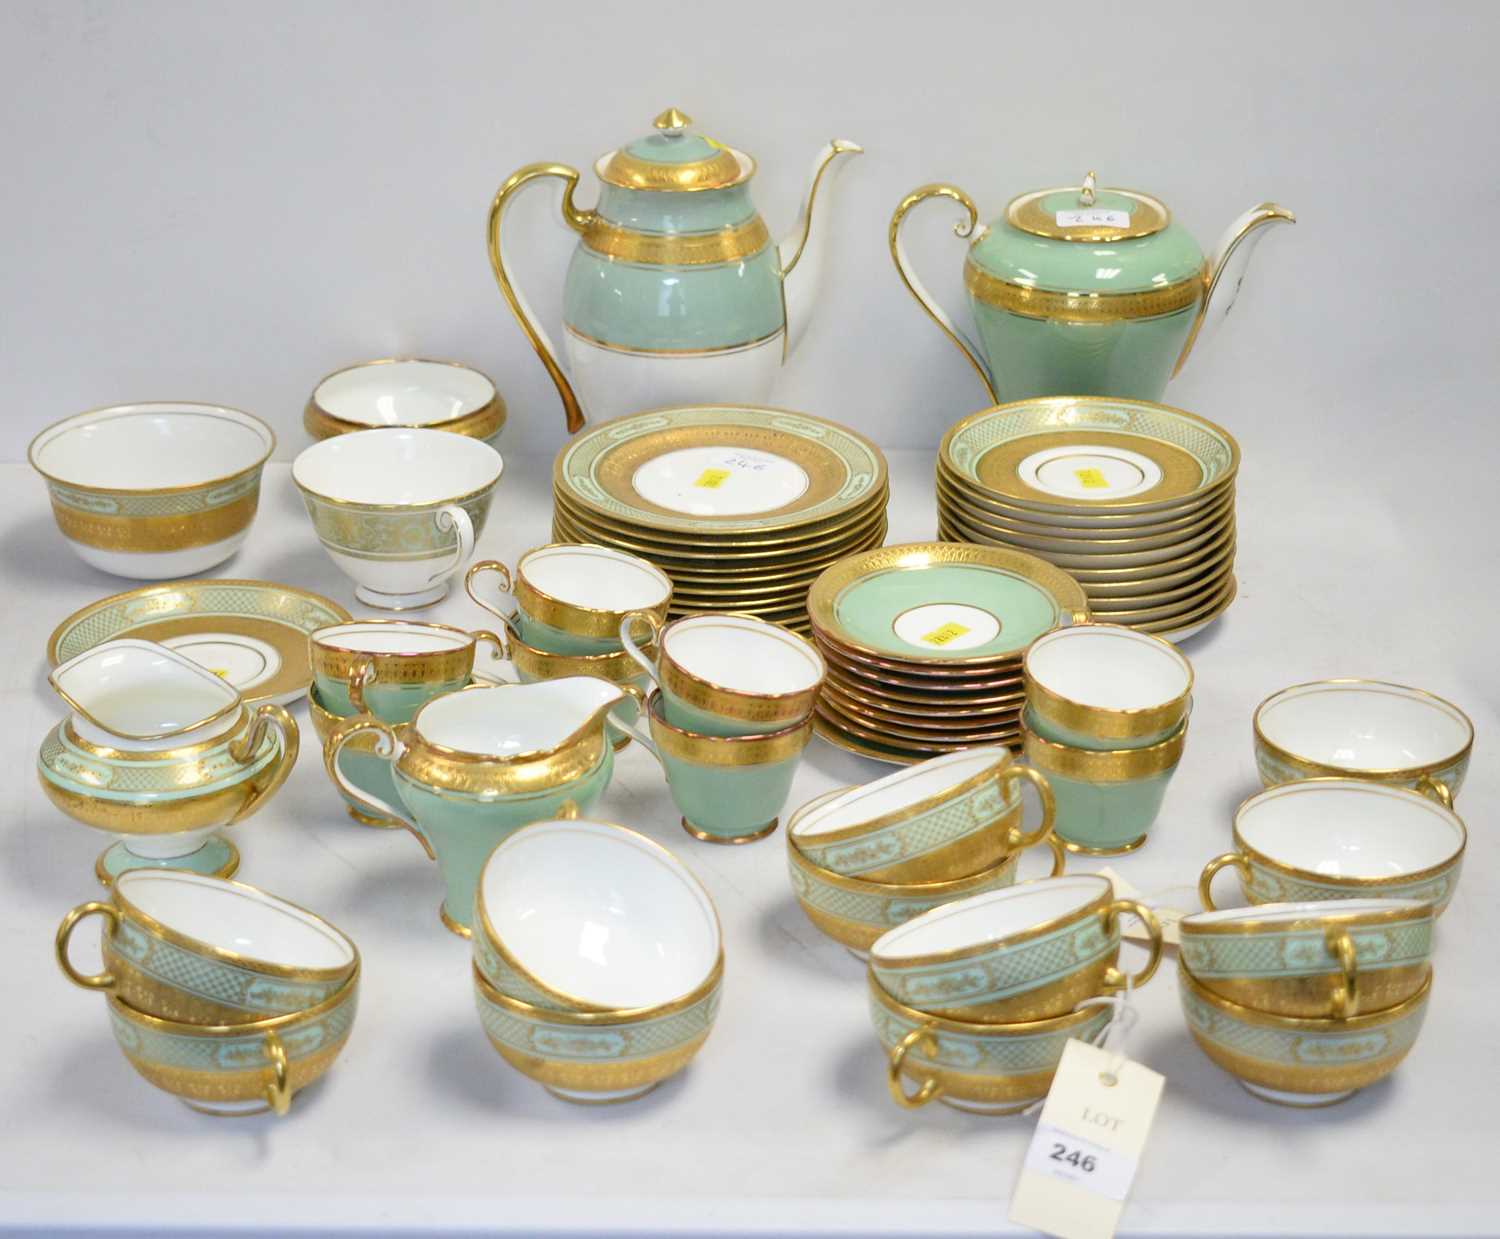 Lot 246 - Royal Doulton tea service and similar Aynsley tea and coffee ware